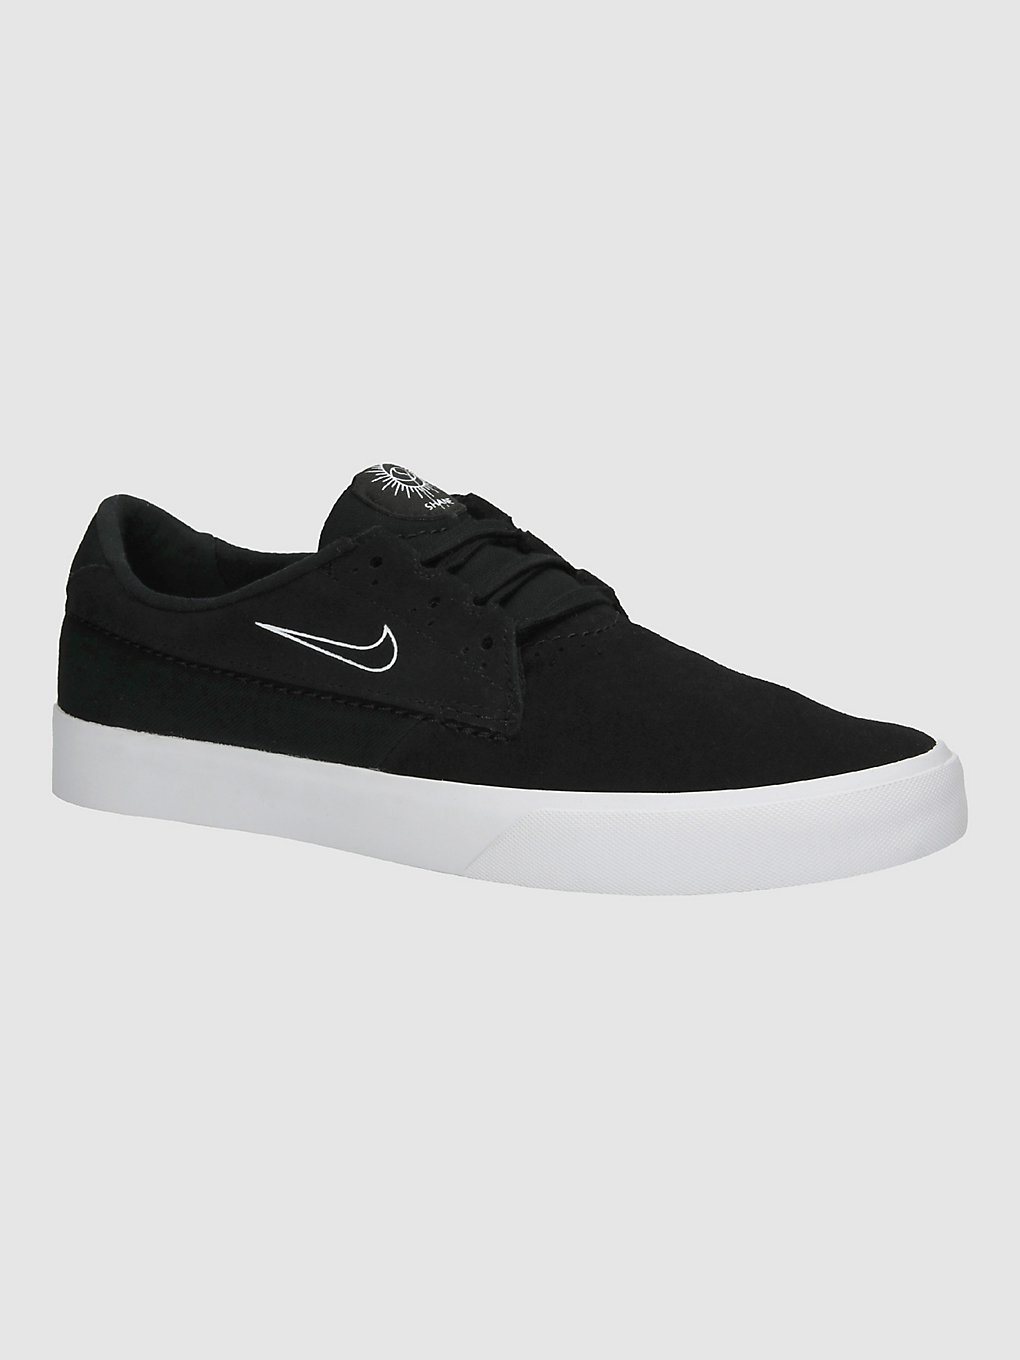 Nike SB Shane Chaussures de skate noir